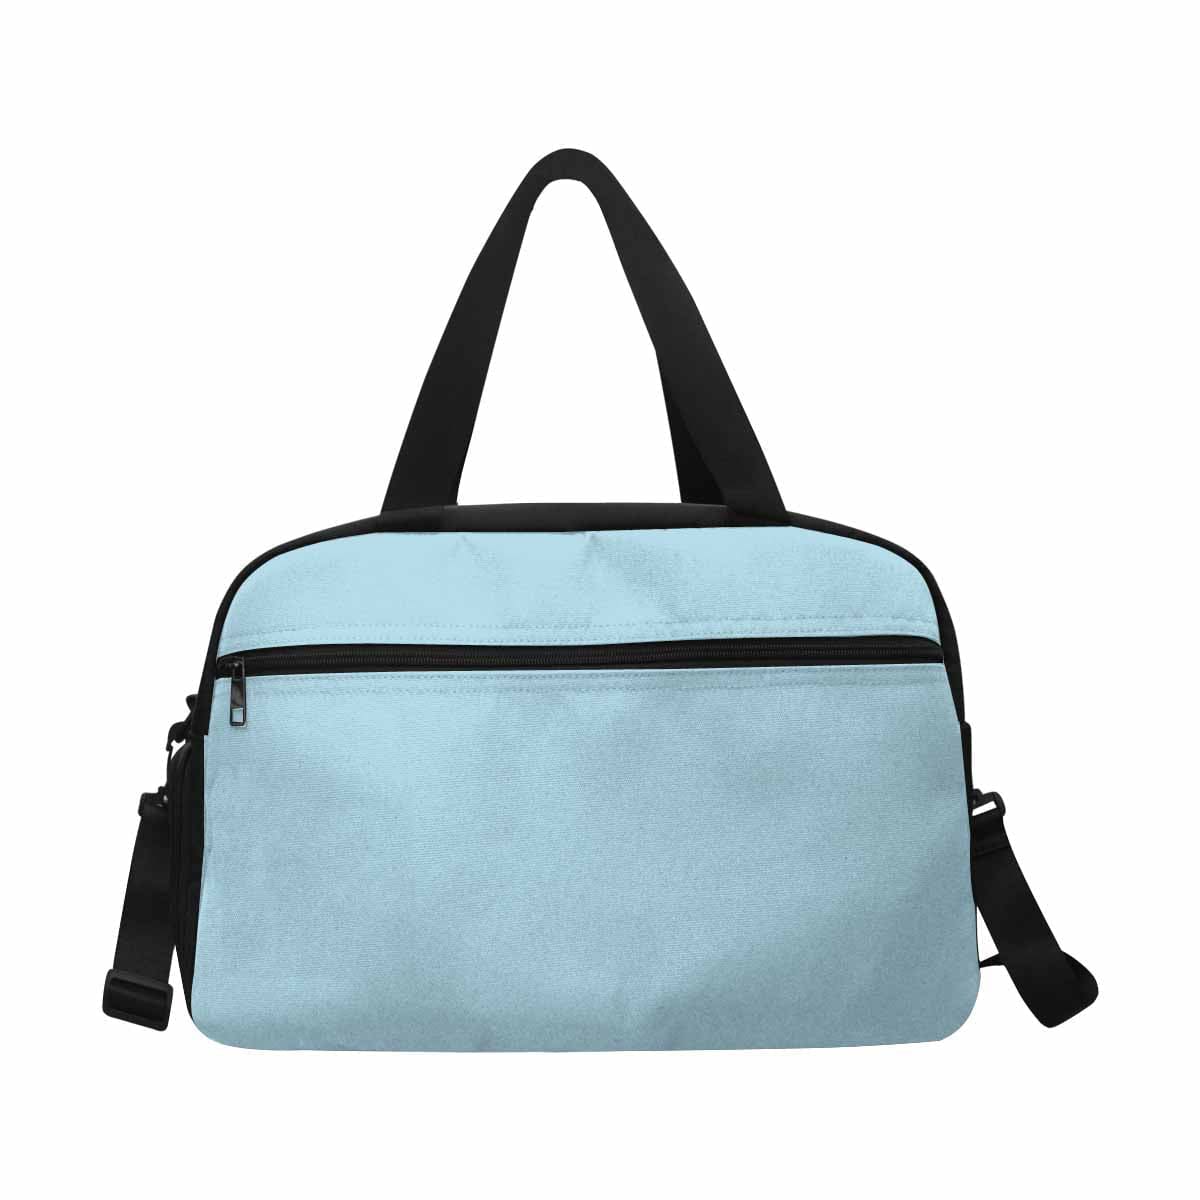 Light Blue Tote And Crossbody Travel Bag - Bags | Travel Bags | Crossbody